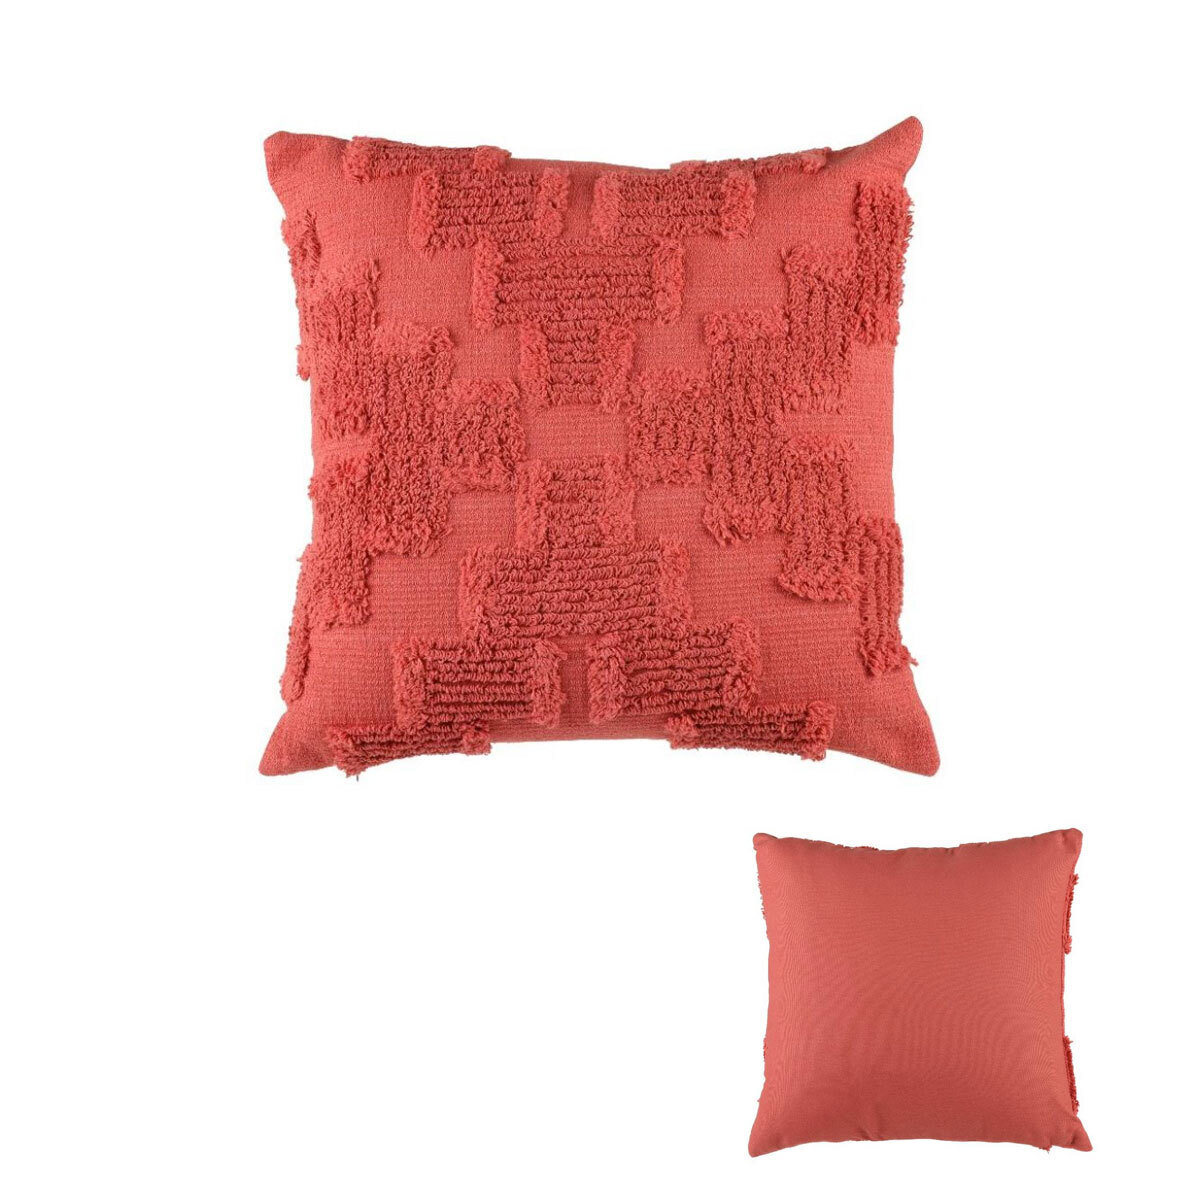 Accessorize Roseto Square Filled Cushion 45cm x 45cm Price